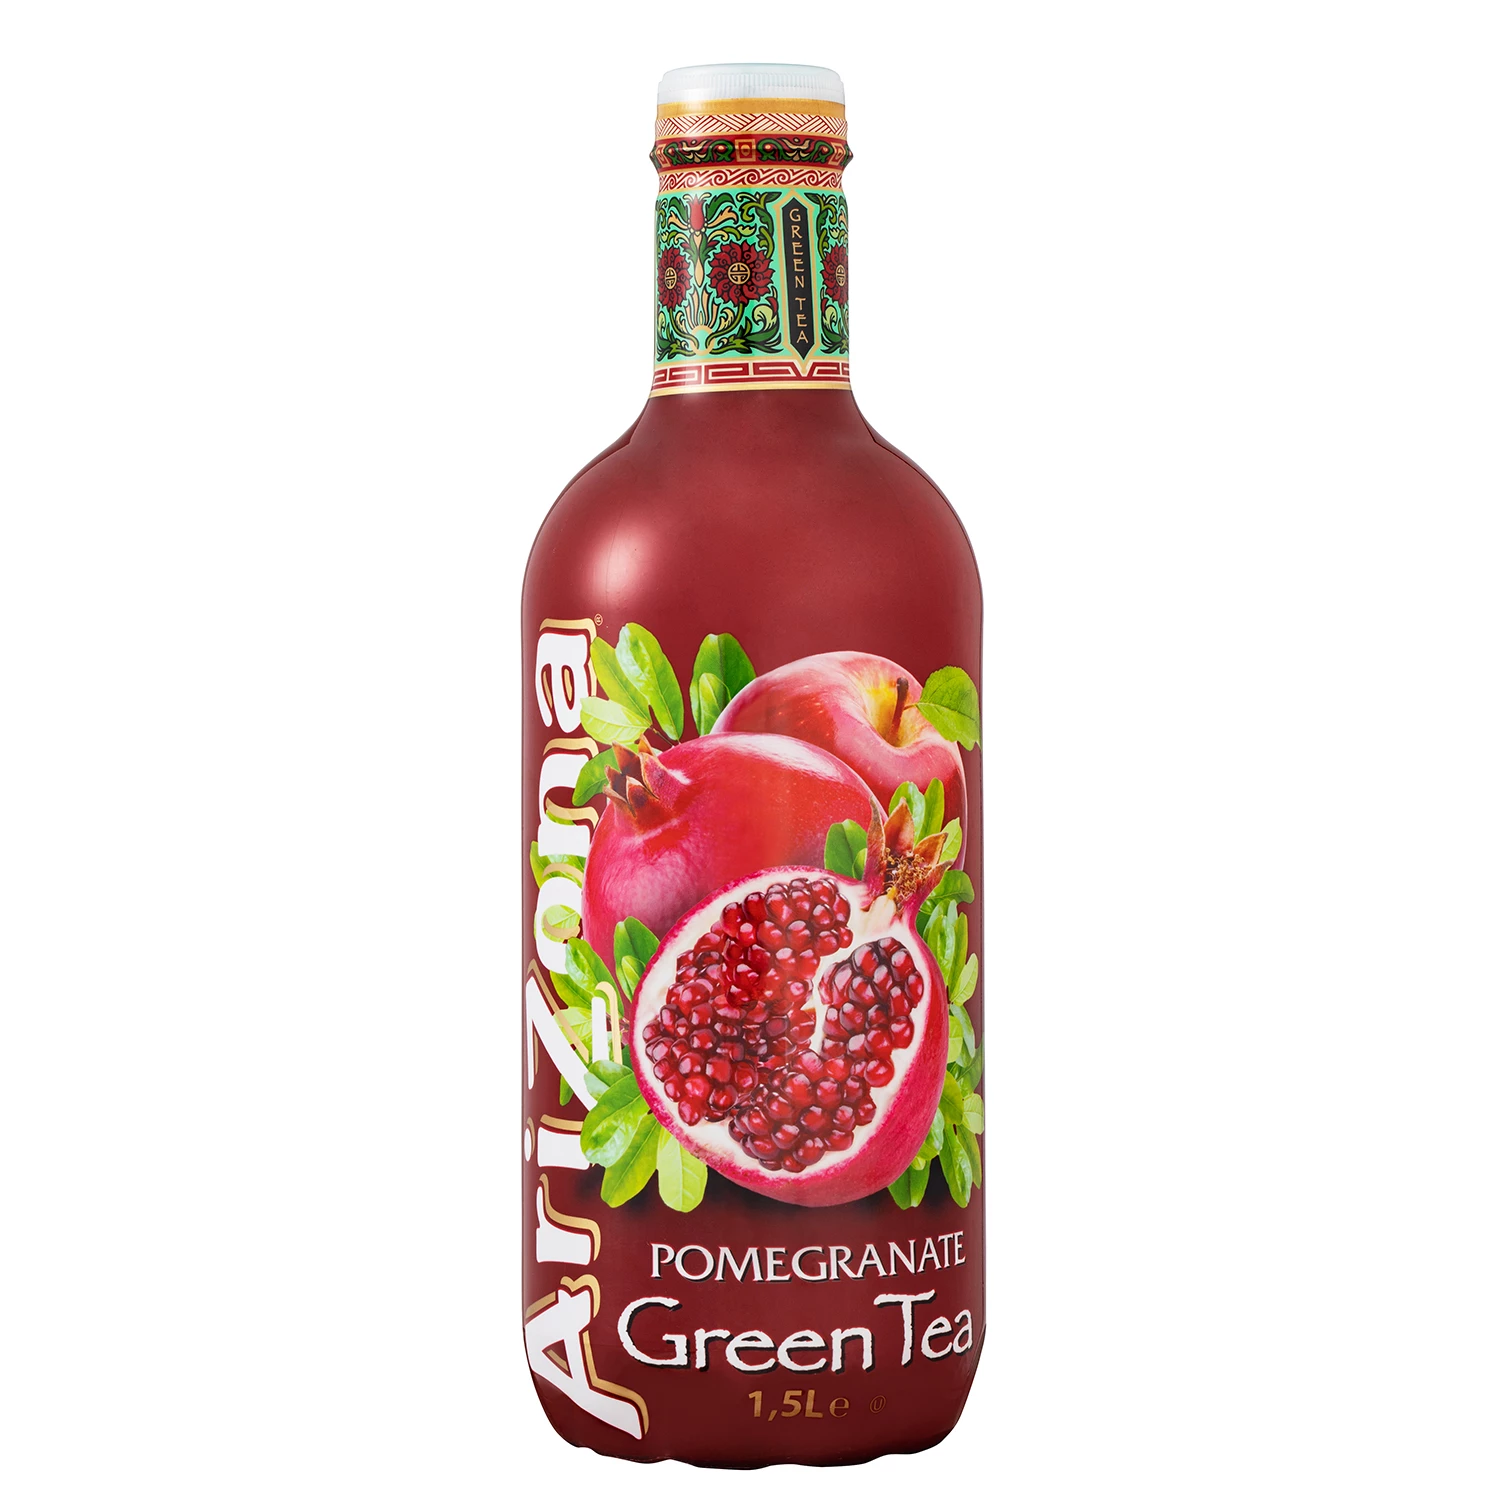 Green iced tea and pomegranate 1.5L - ARIZONA